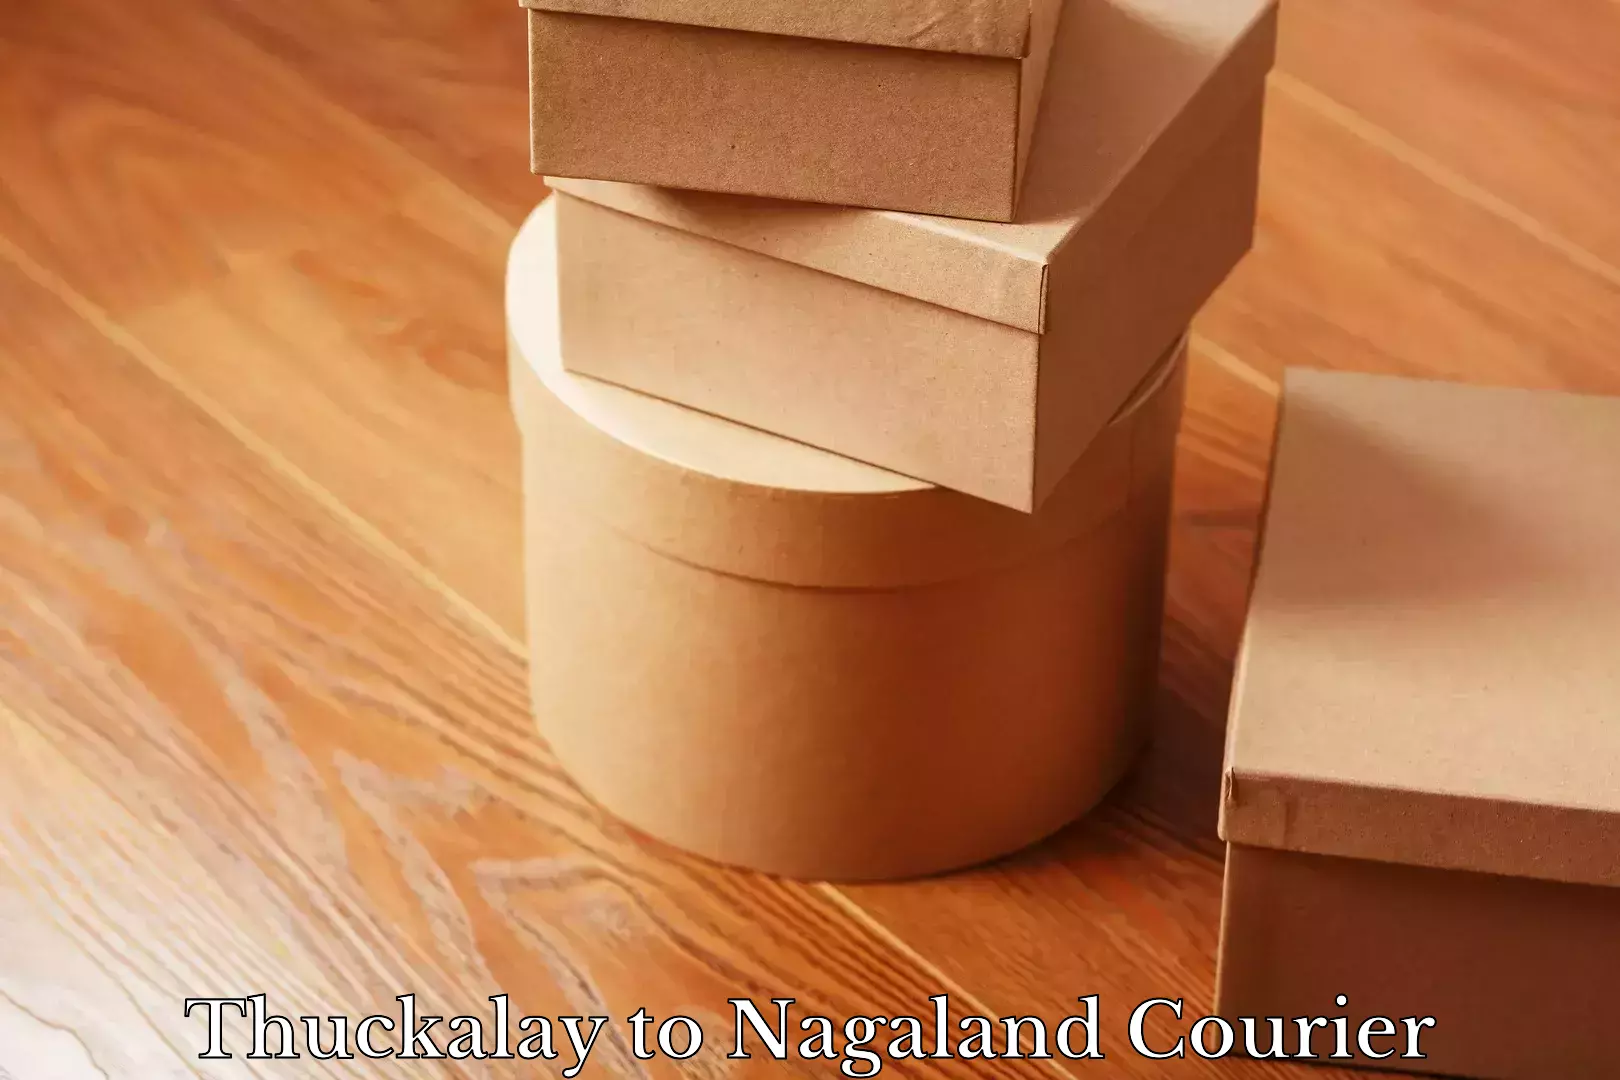 Express courier capabilities Thuckalay to Nagaland